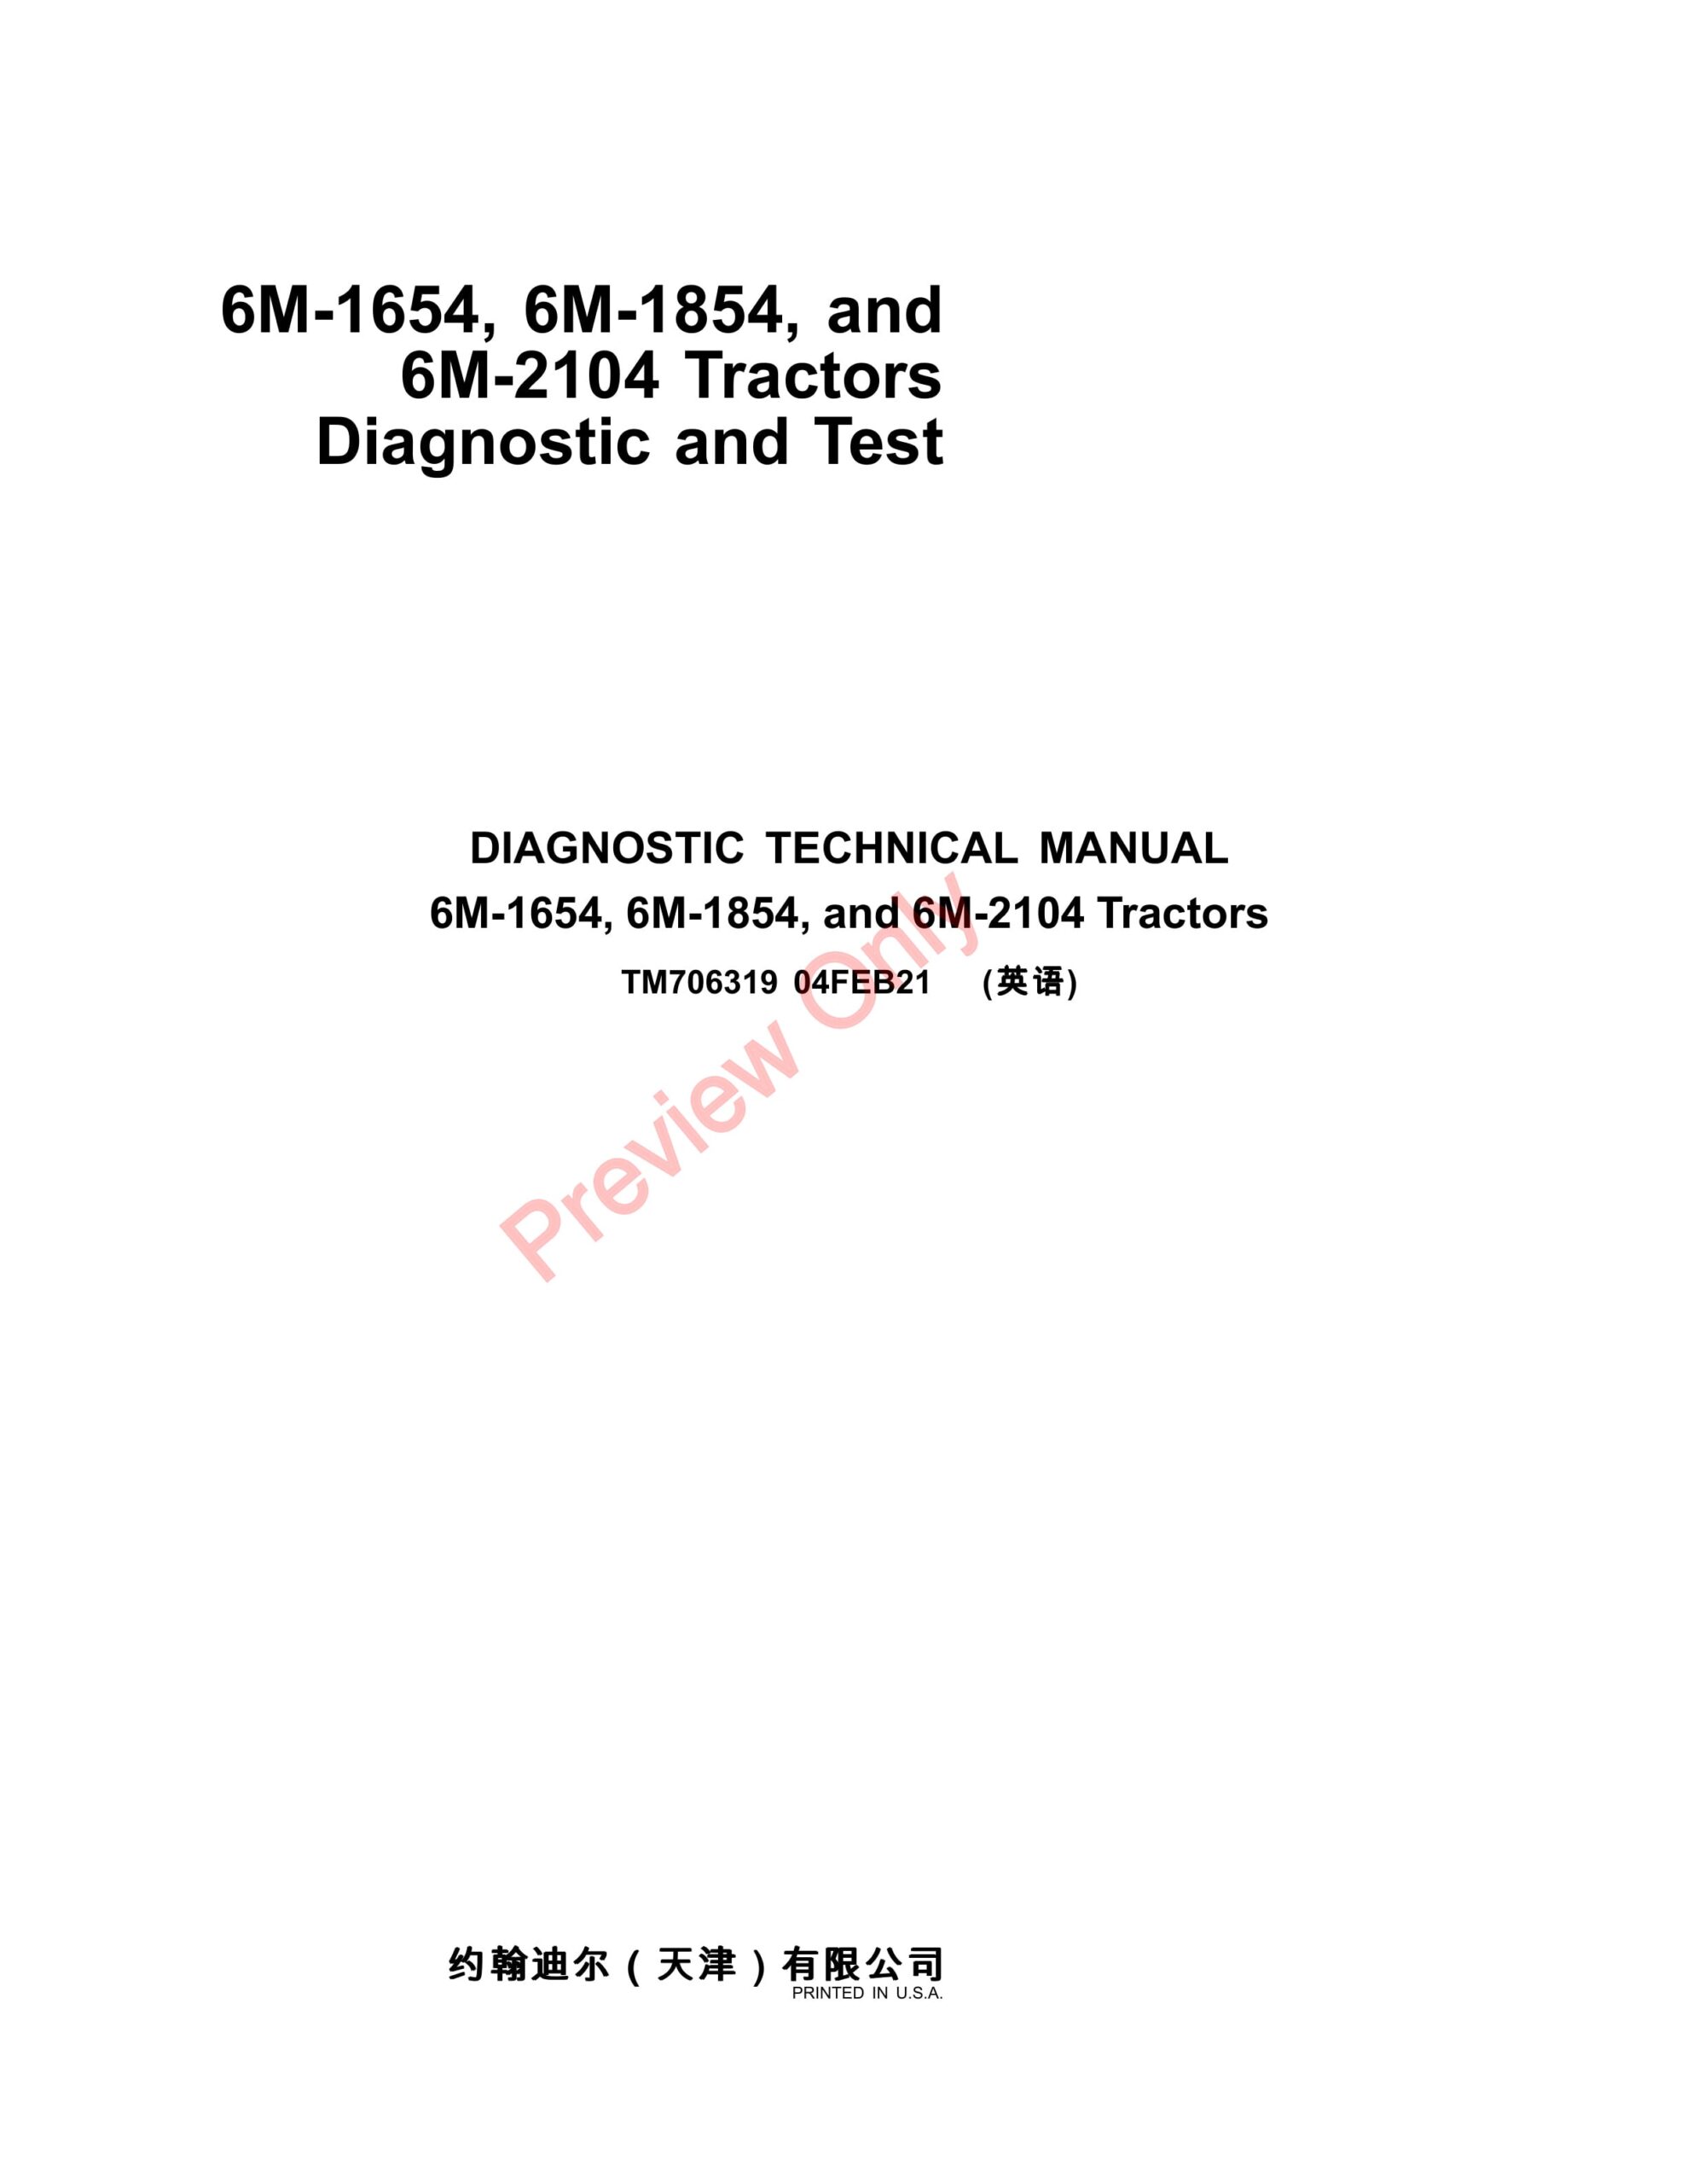 John Deere 6M-1654, 6M-1854, and 6M-2104 Tractors (Asia, English) Diagnostic Technical Manual TM706319 04FEB21-1